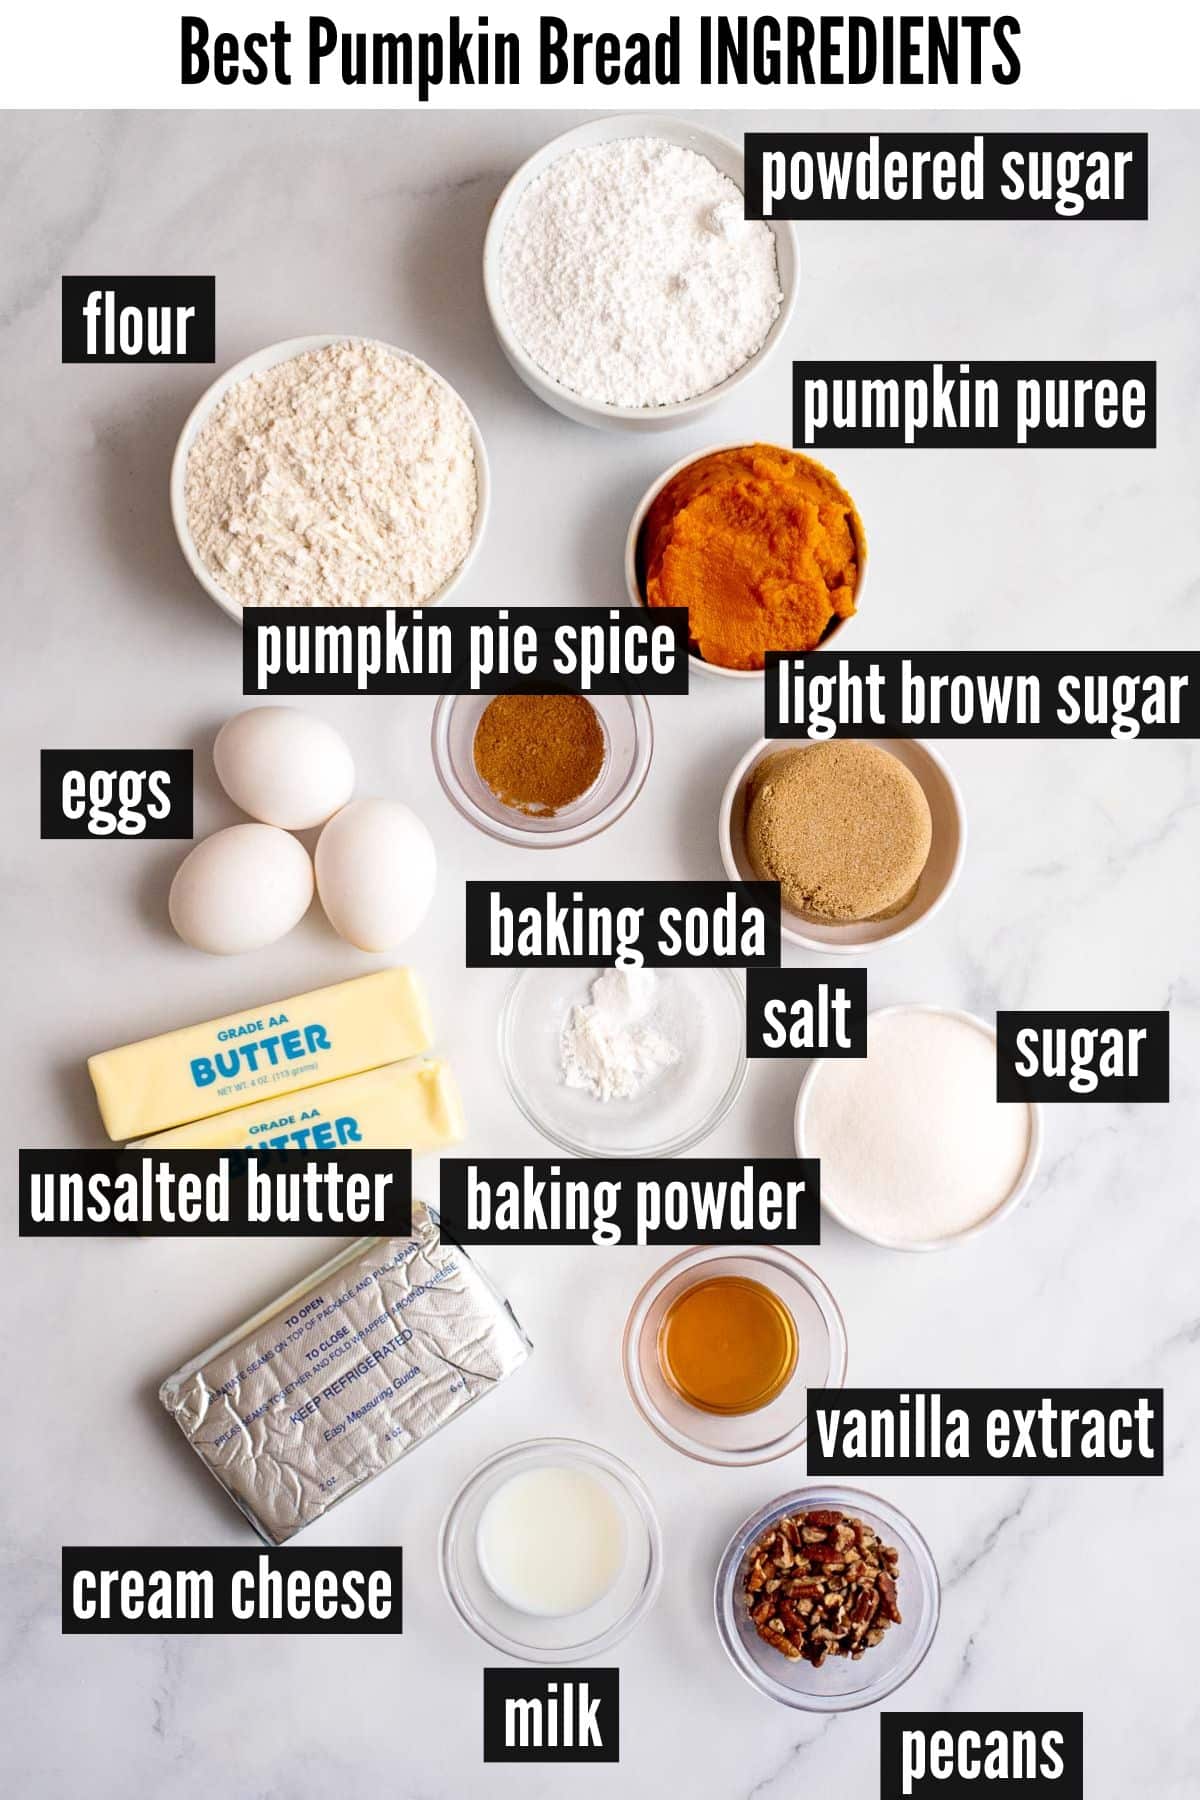 best pumpkin bread labelled ingredients.